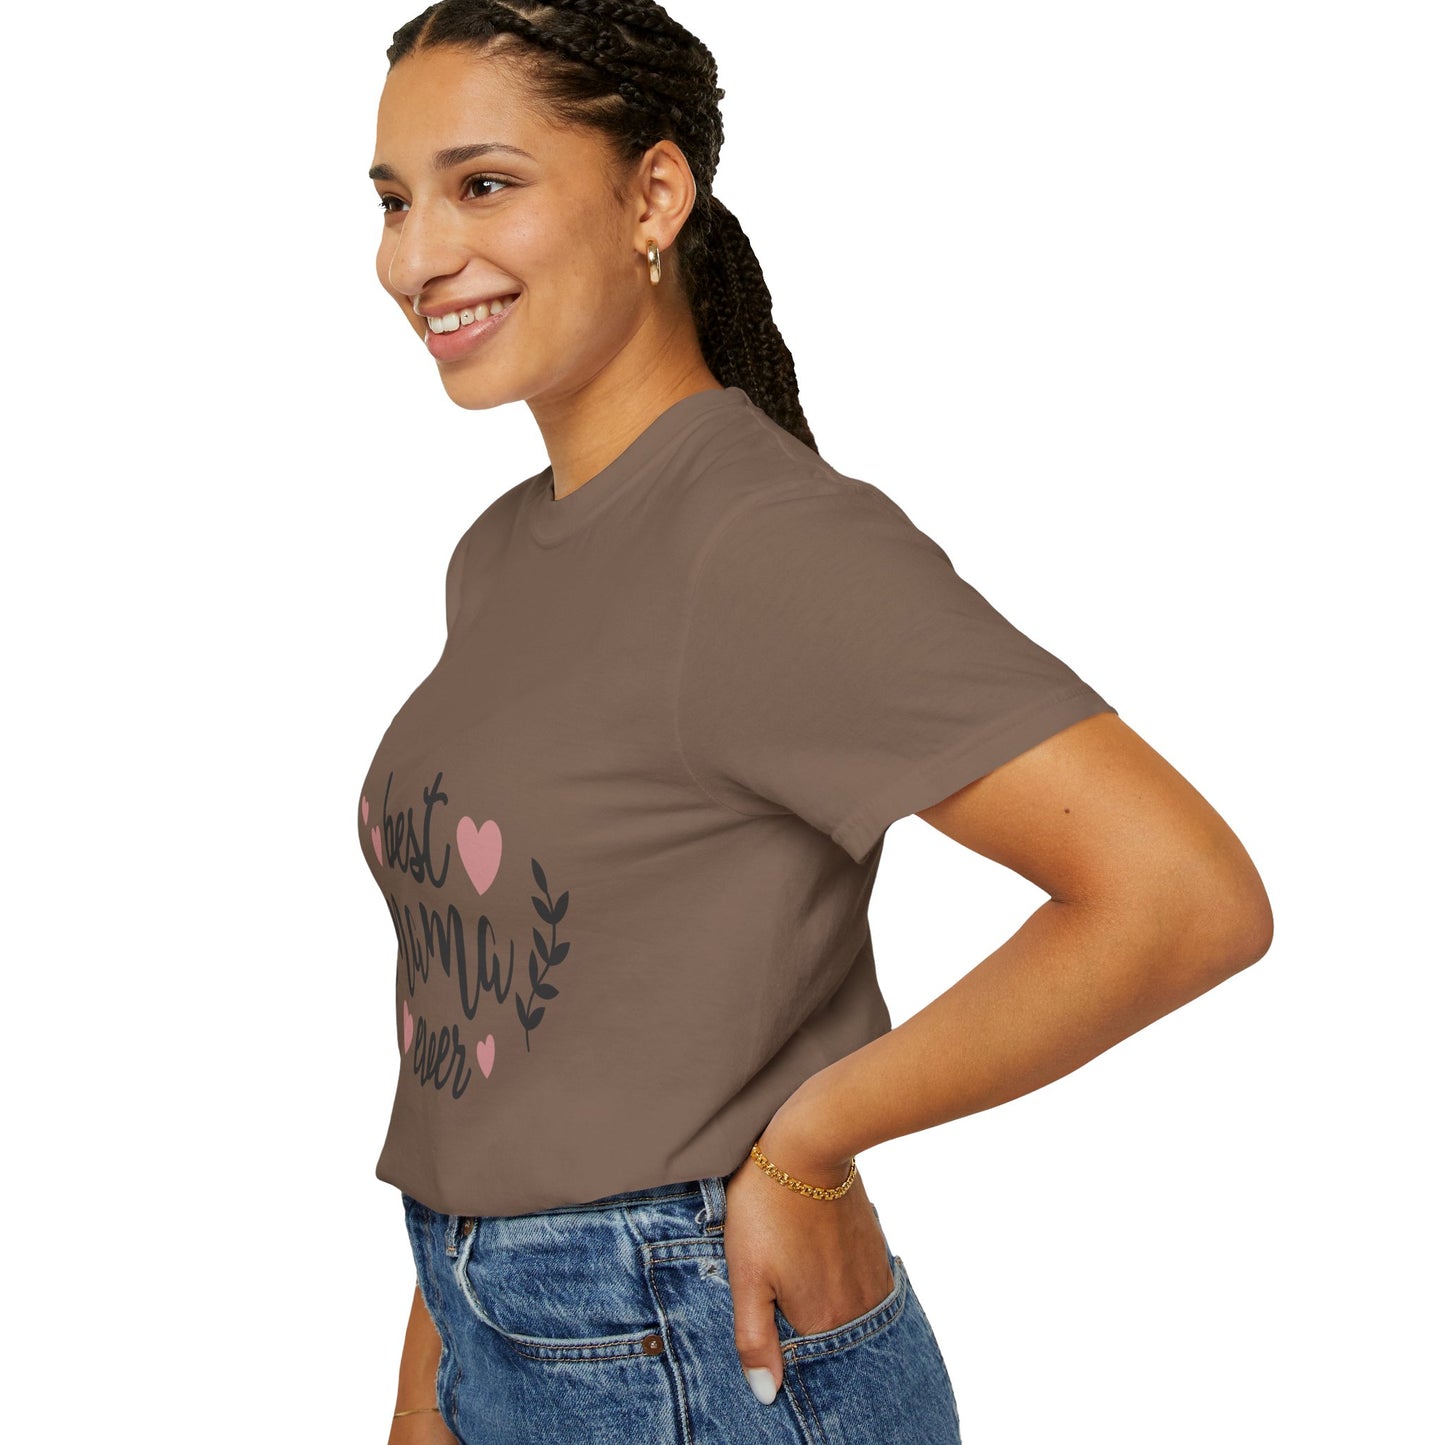 Best mom ever - Unisex Garment-Dyed T-shirt